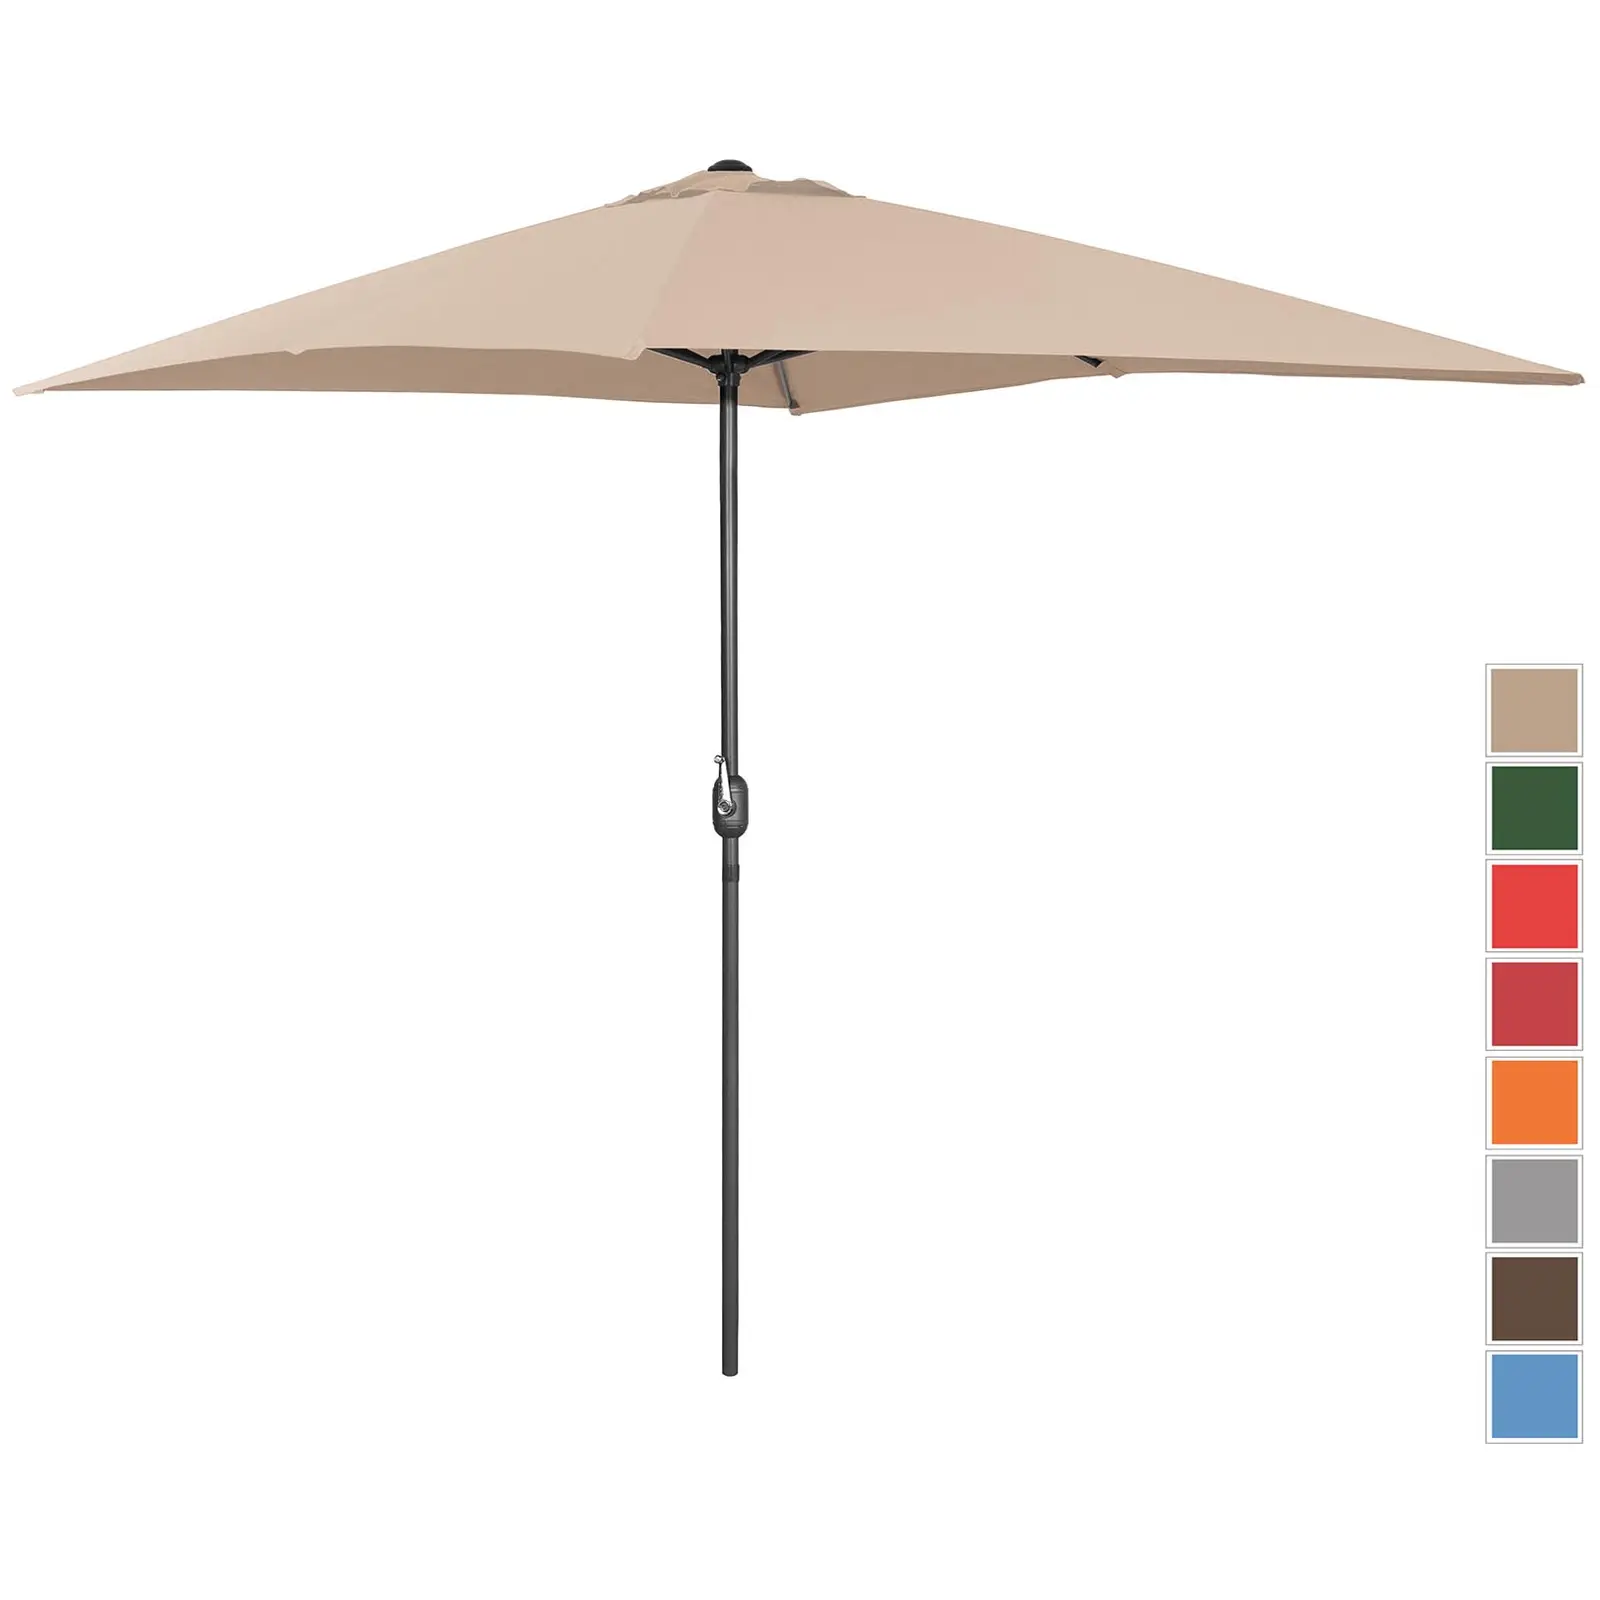 Aurinkovarjo - suuri - kermanvärinen - suorakulmainen - 200 x 300 cm